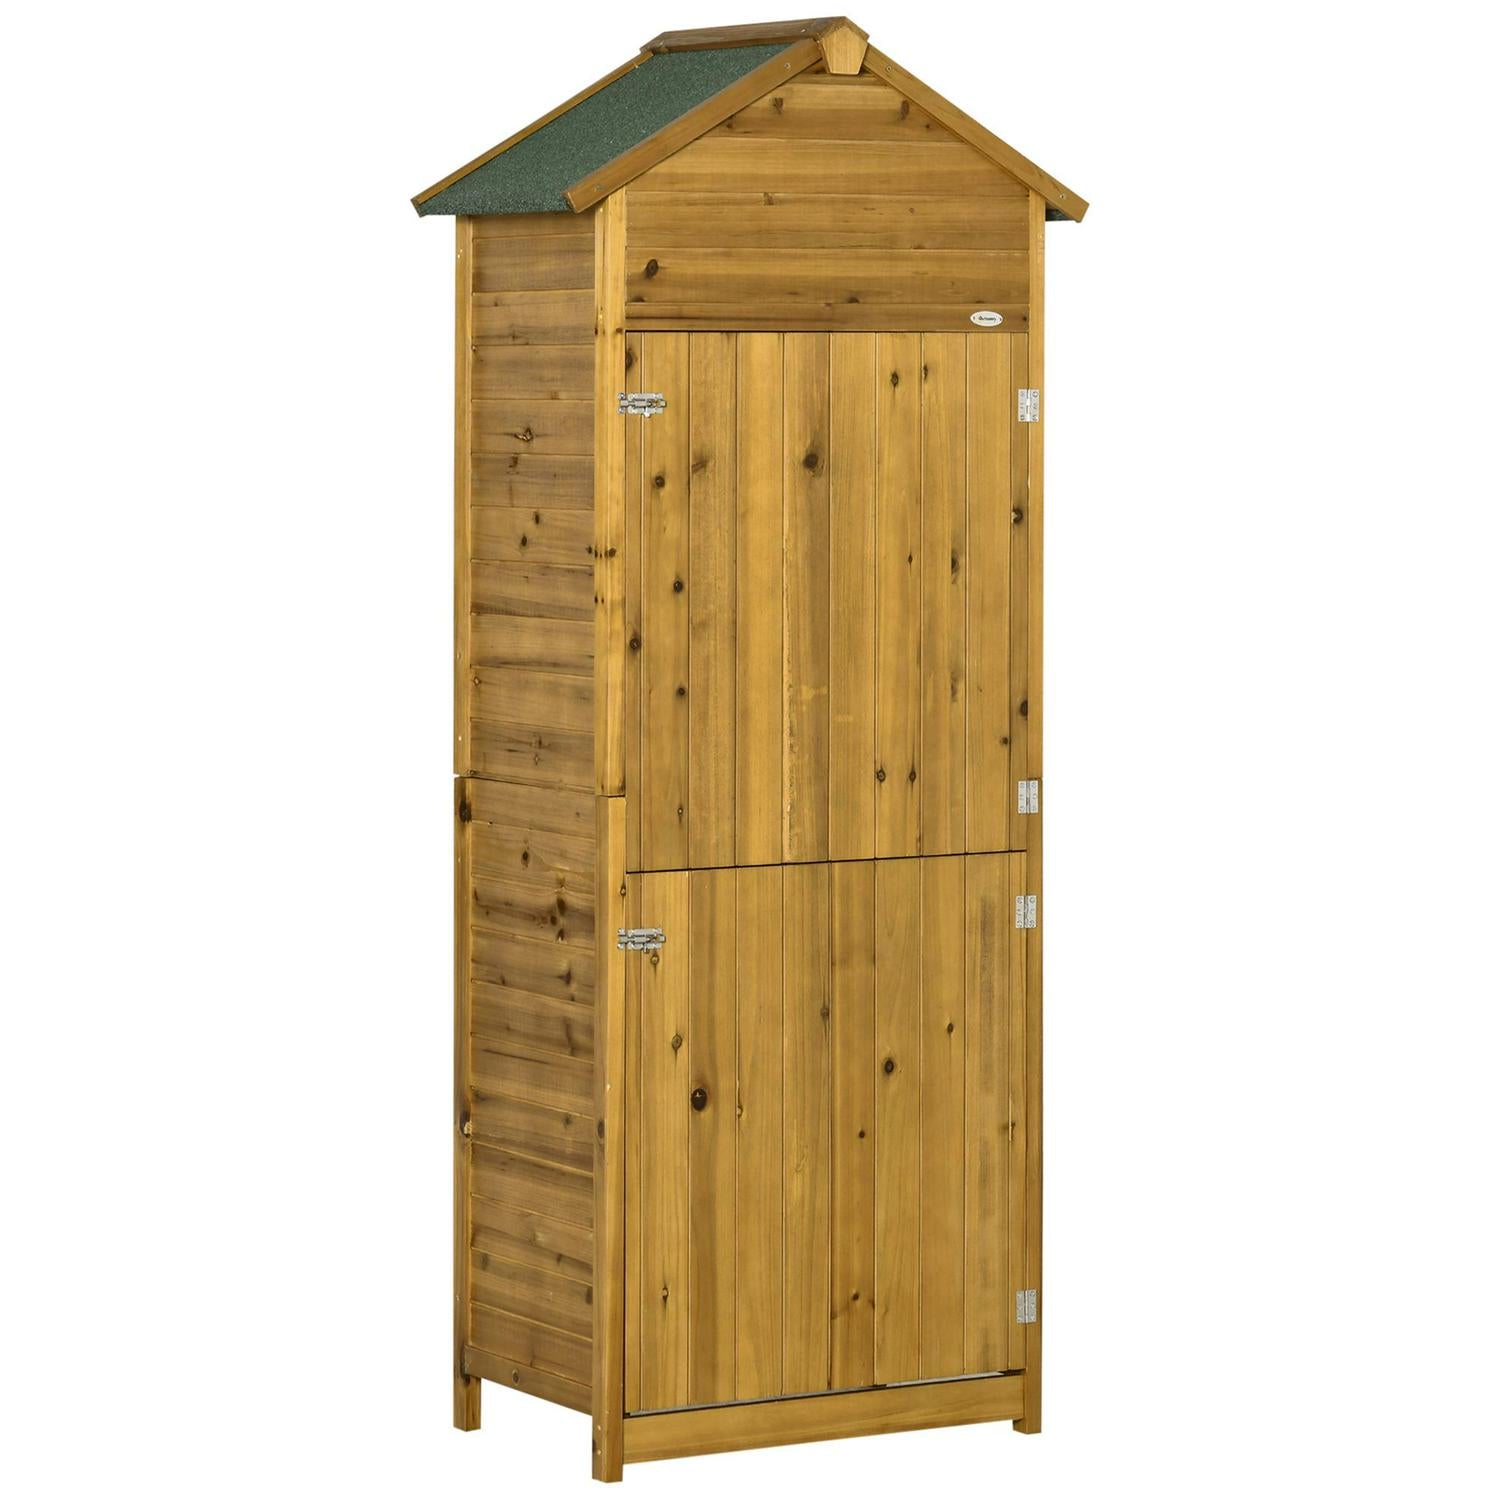 Wooden Garden Storage Shed Utility Gardener Cabinet W/ 3 Shelves And 2 Door, 191.5cm X 79cm 49cm, Natural Effect